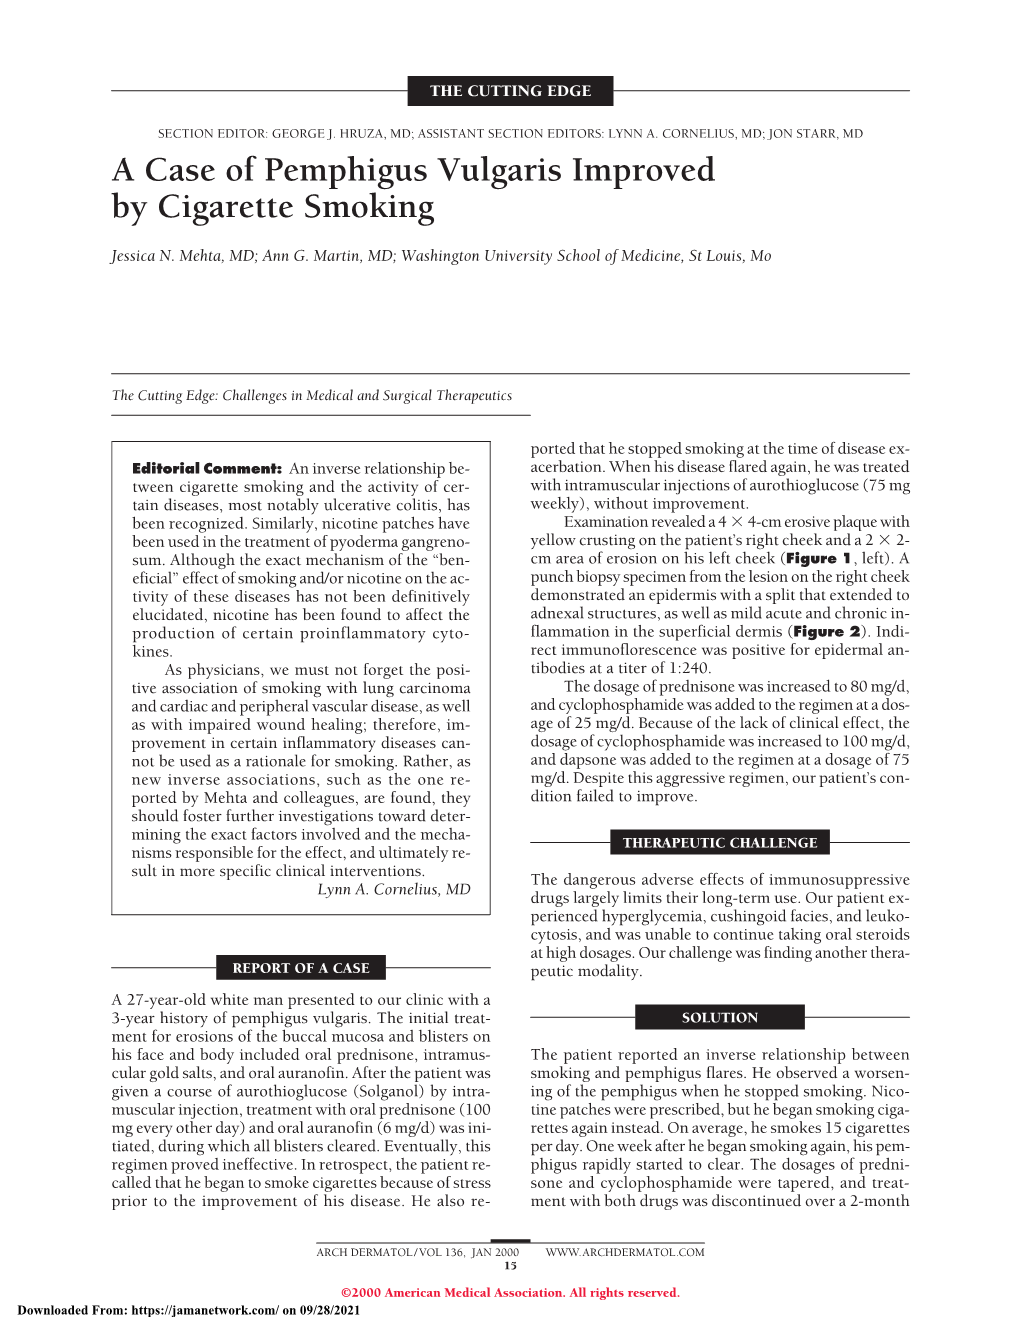 A Case of Pemphigus Vulgaris Improved by Cigarette Smoking